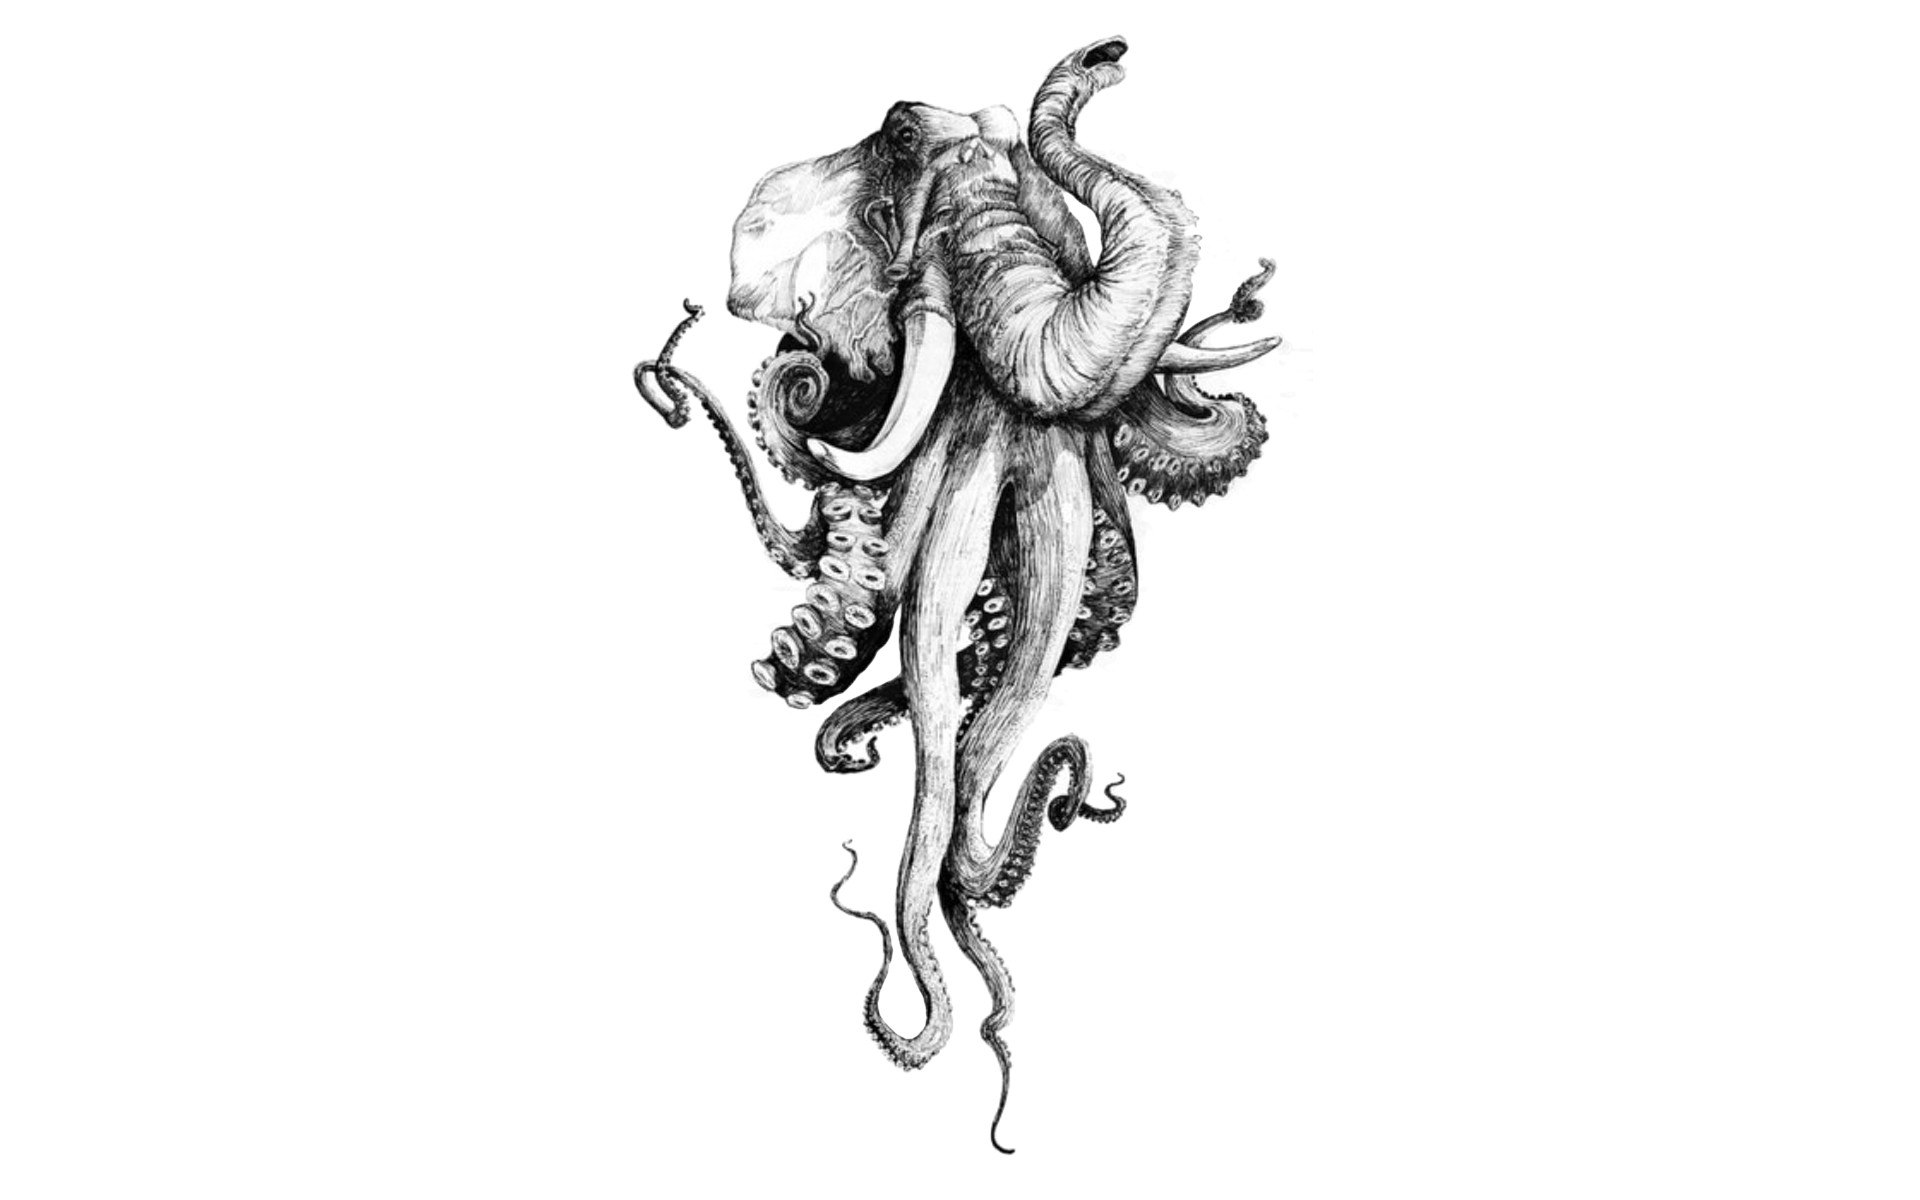 Majestic Depths Stunning 4K Deep Blue Ocean Octopus Wallpaper for Phone  Free Download